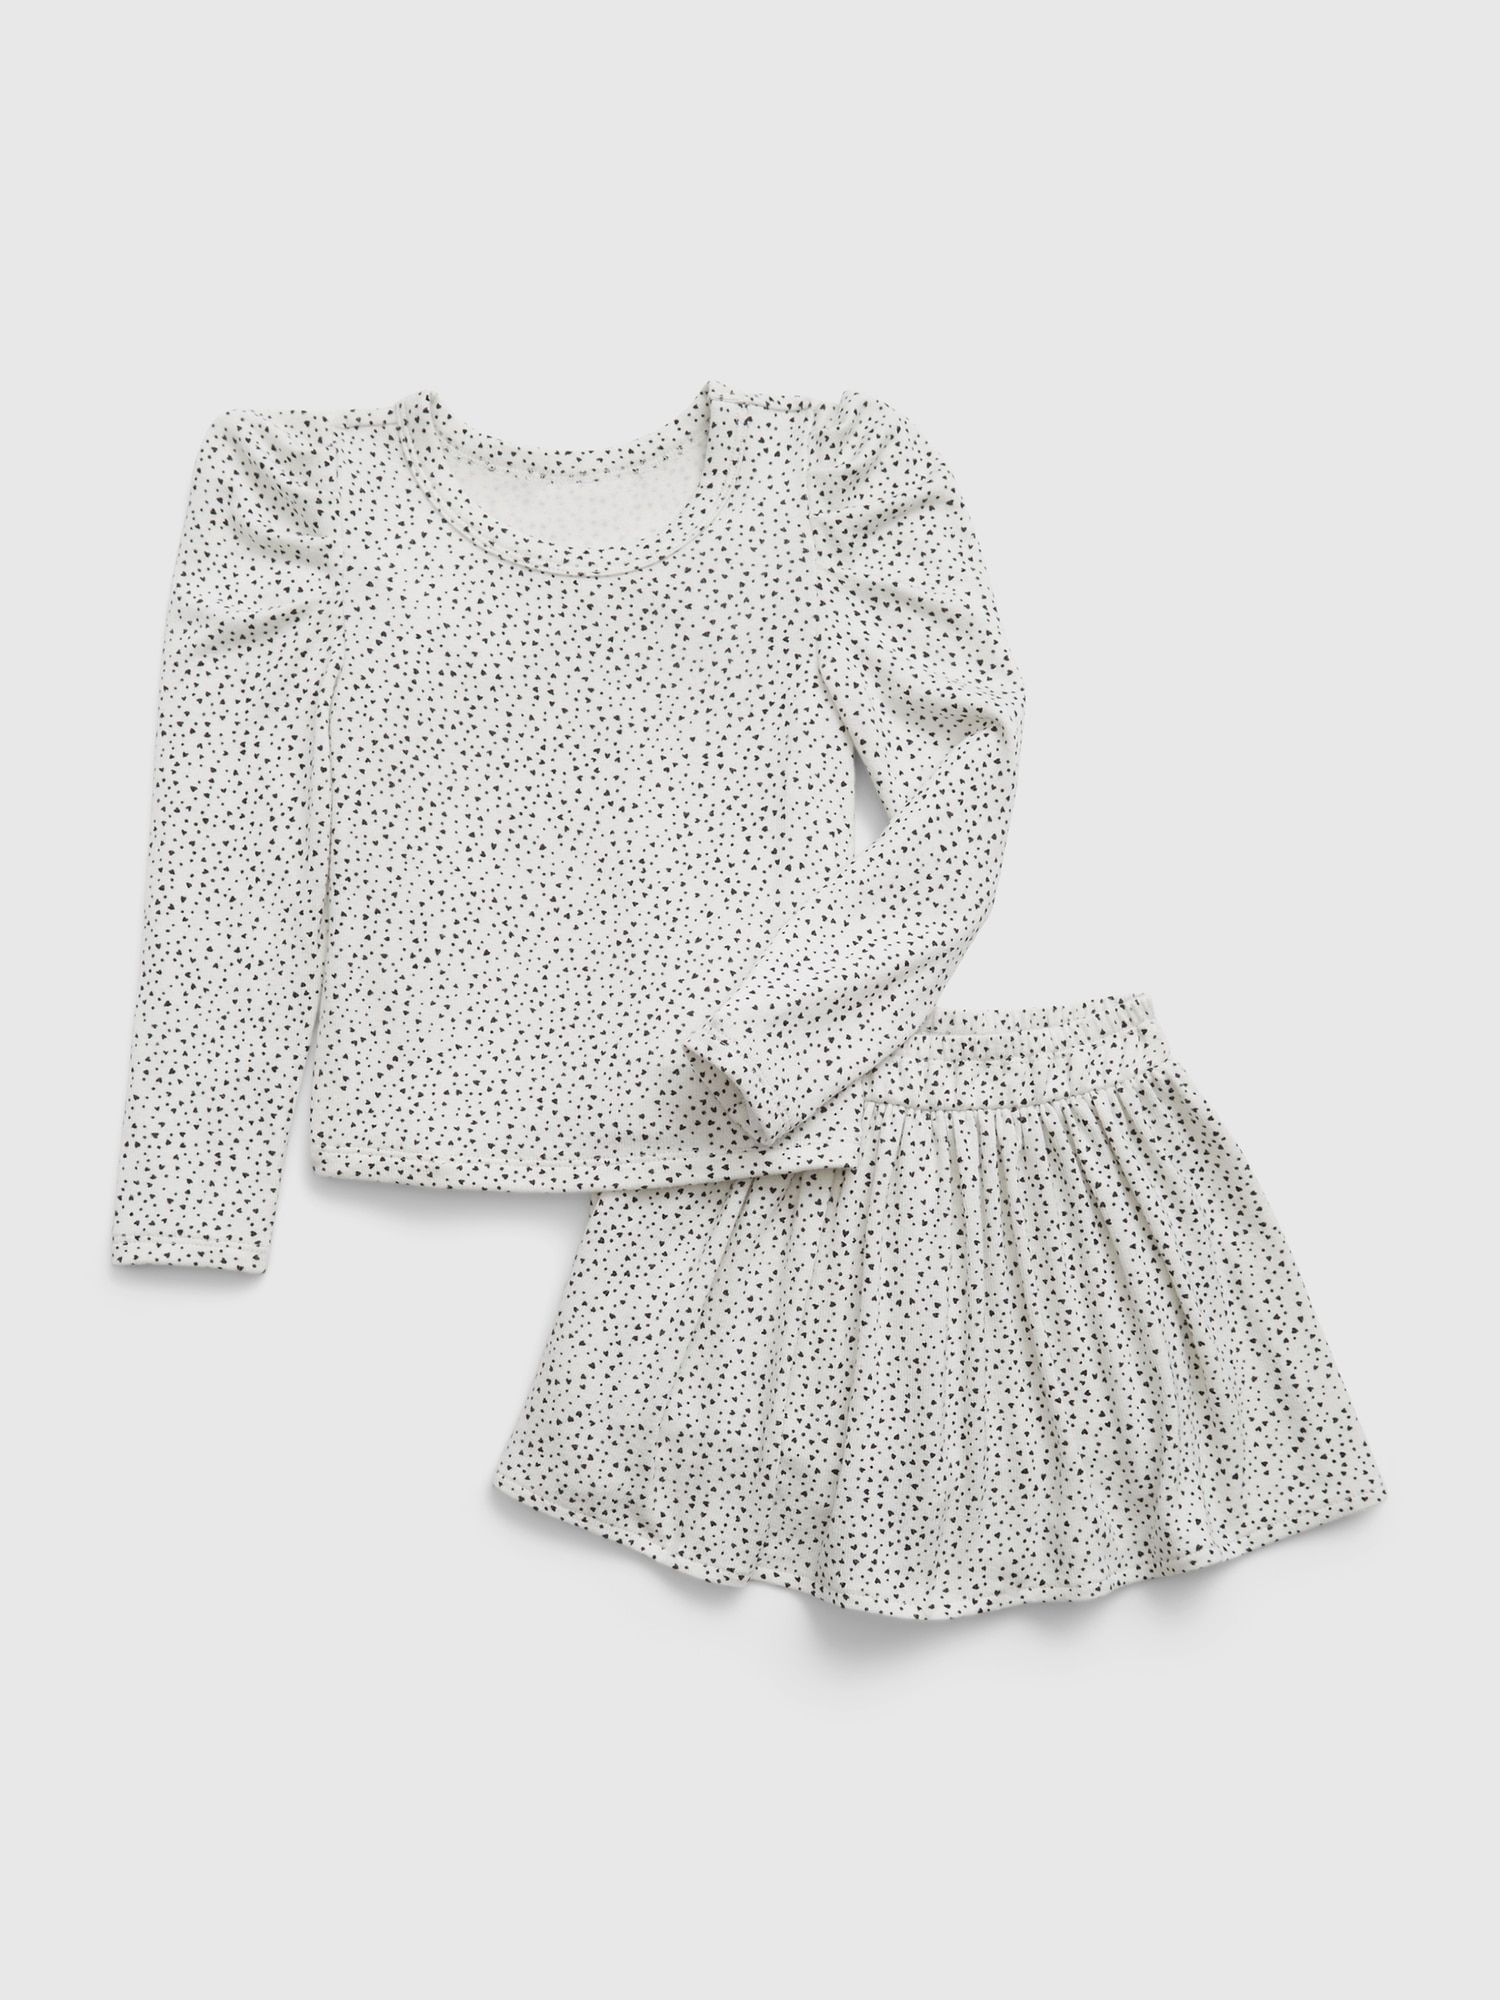 Toddler Softspun Skort Outfit Set